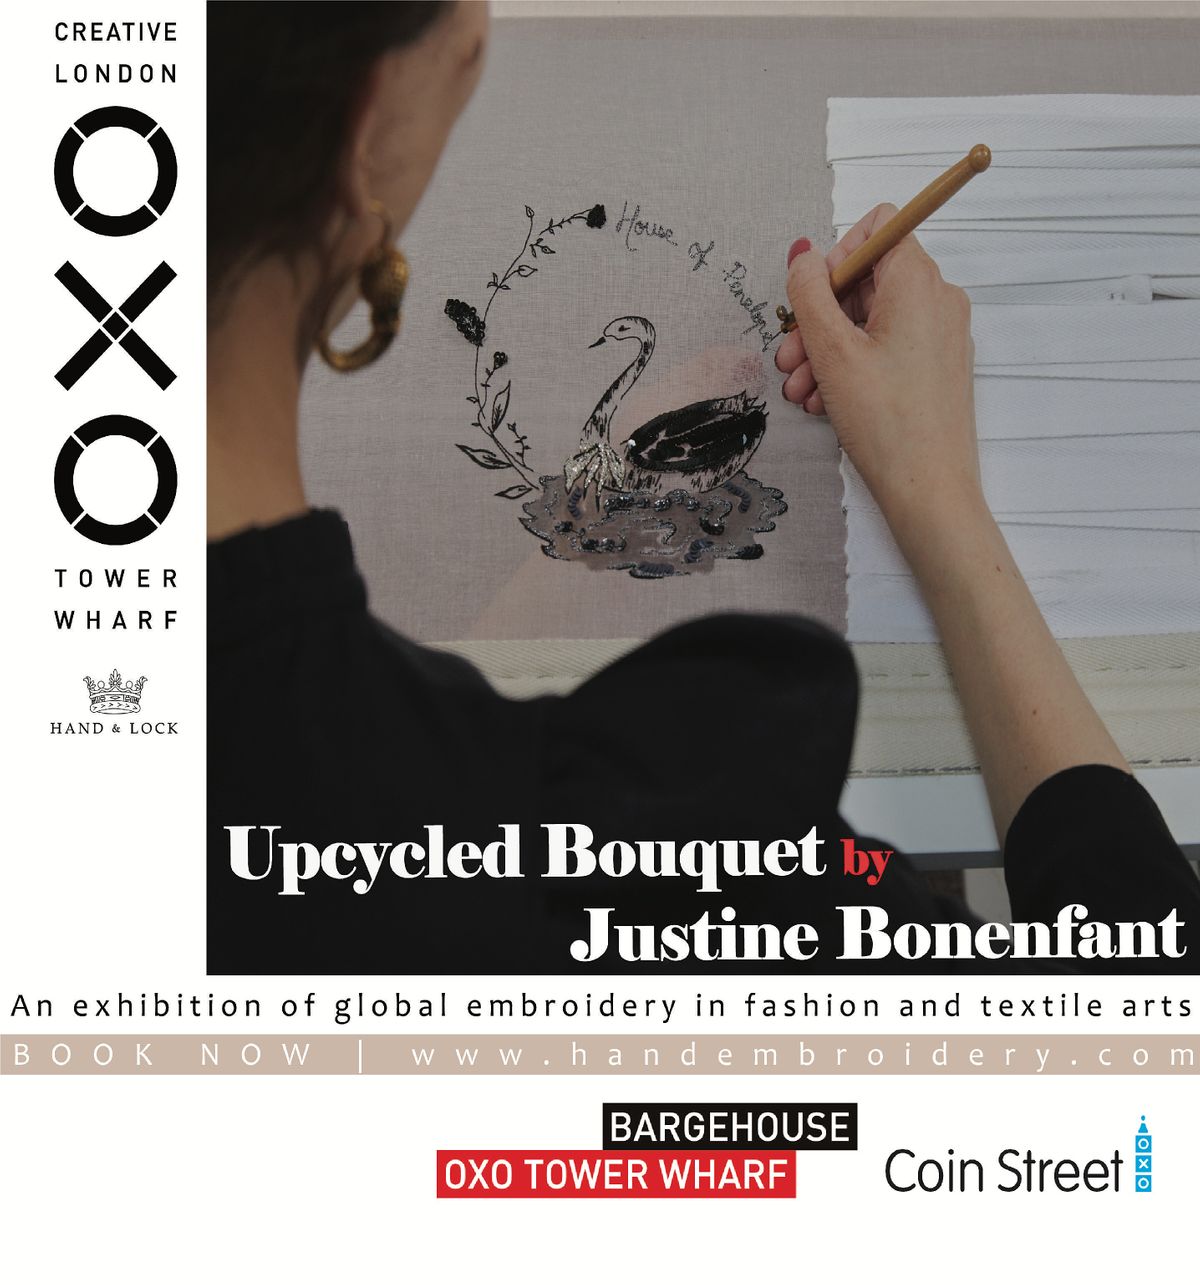 Upcycled Bouquet with Justine Bonenfant